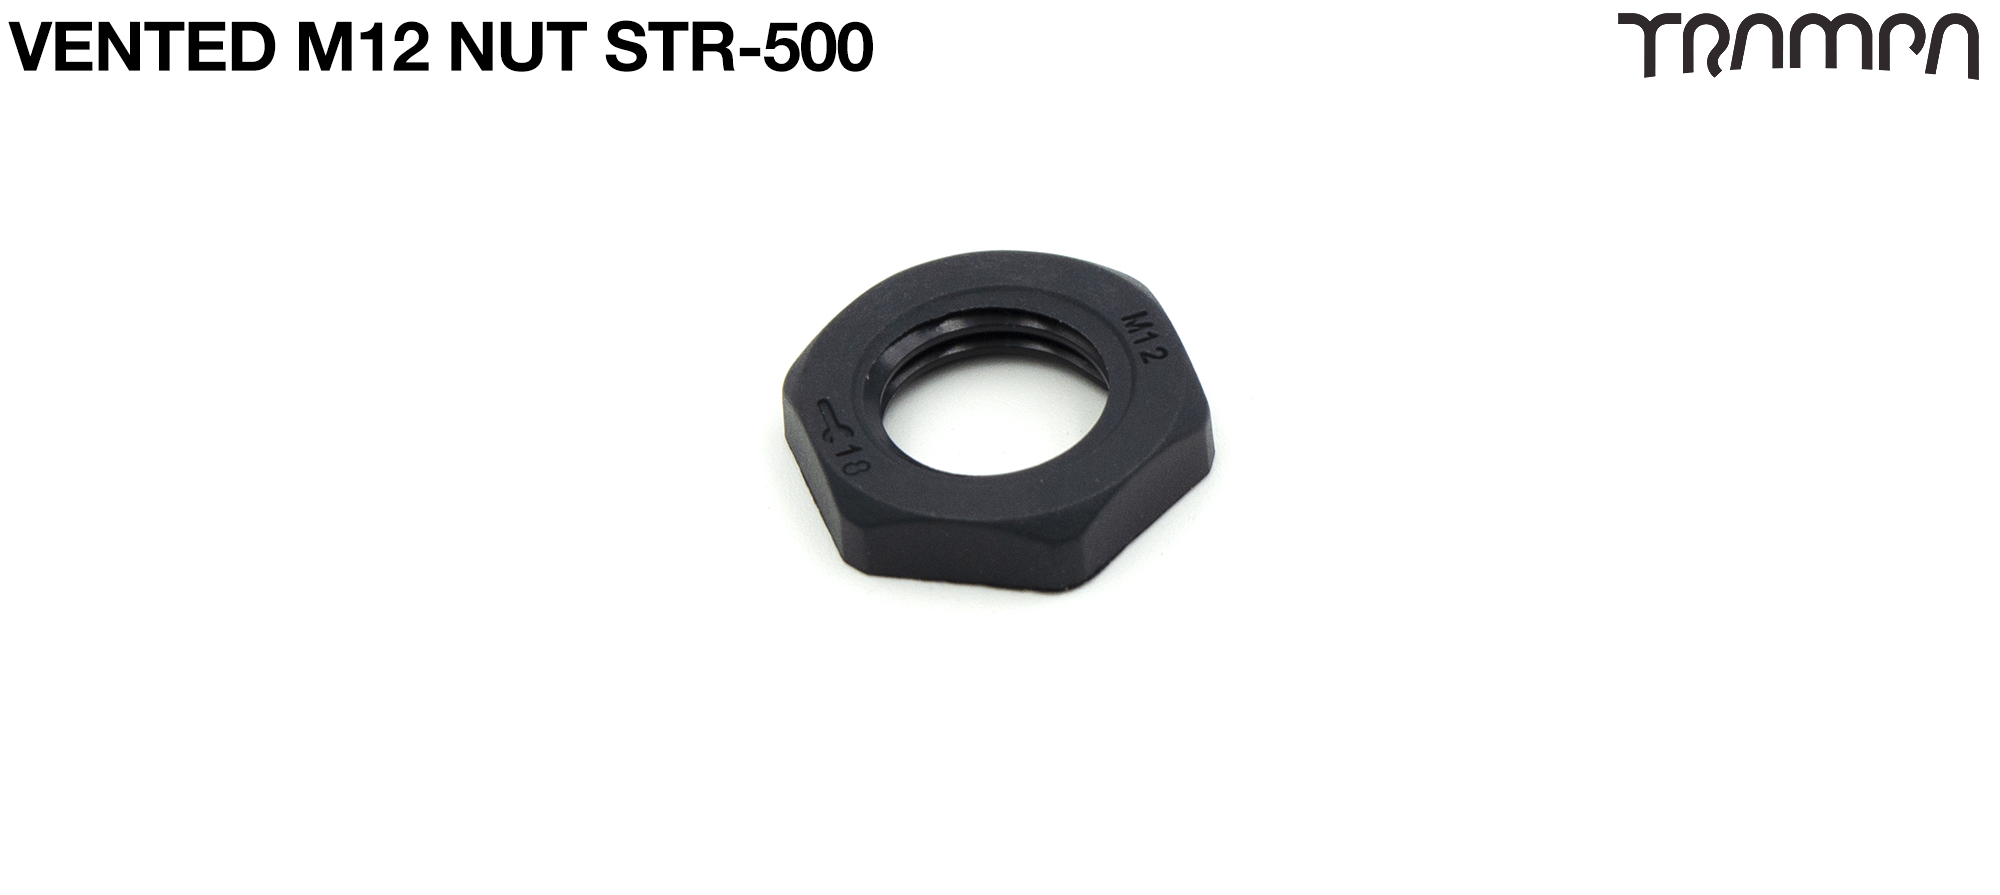 Vented M12 Nut - SRT-500 